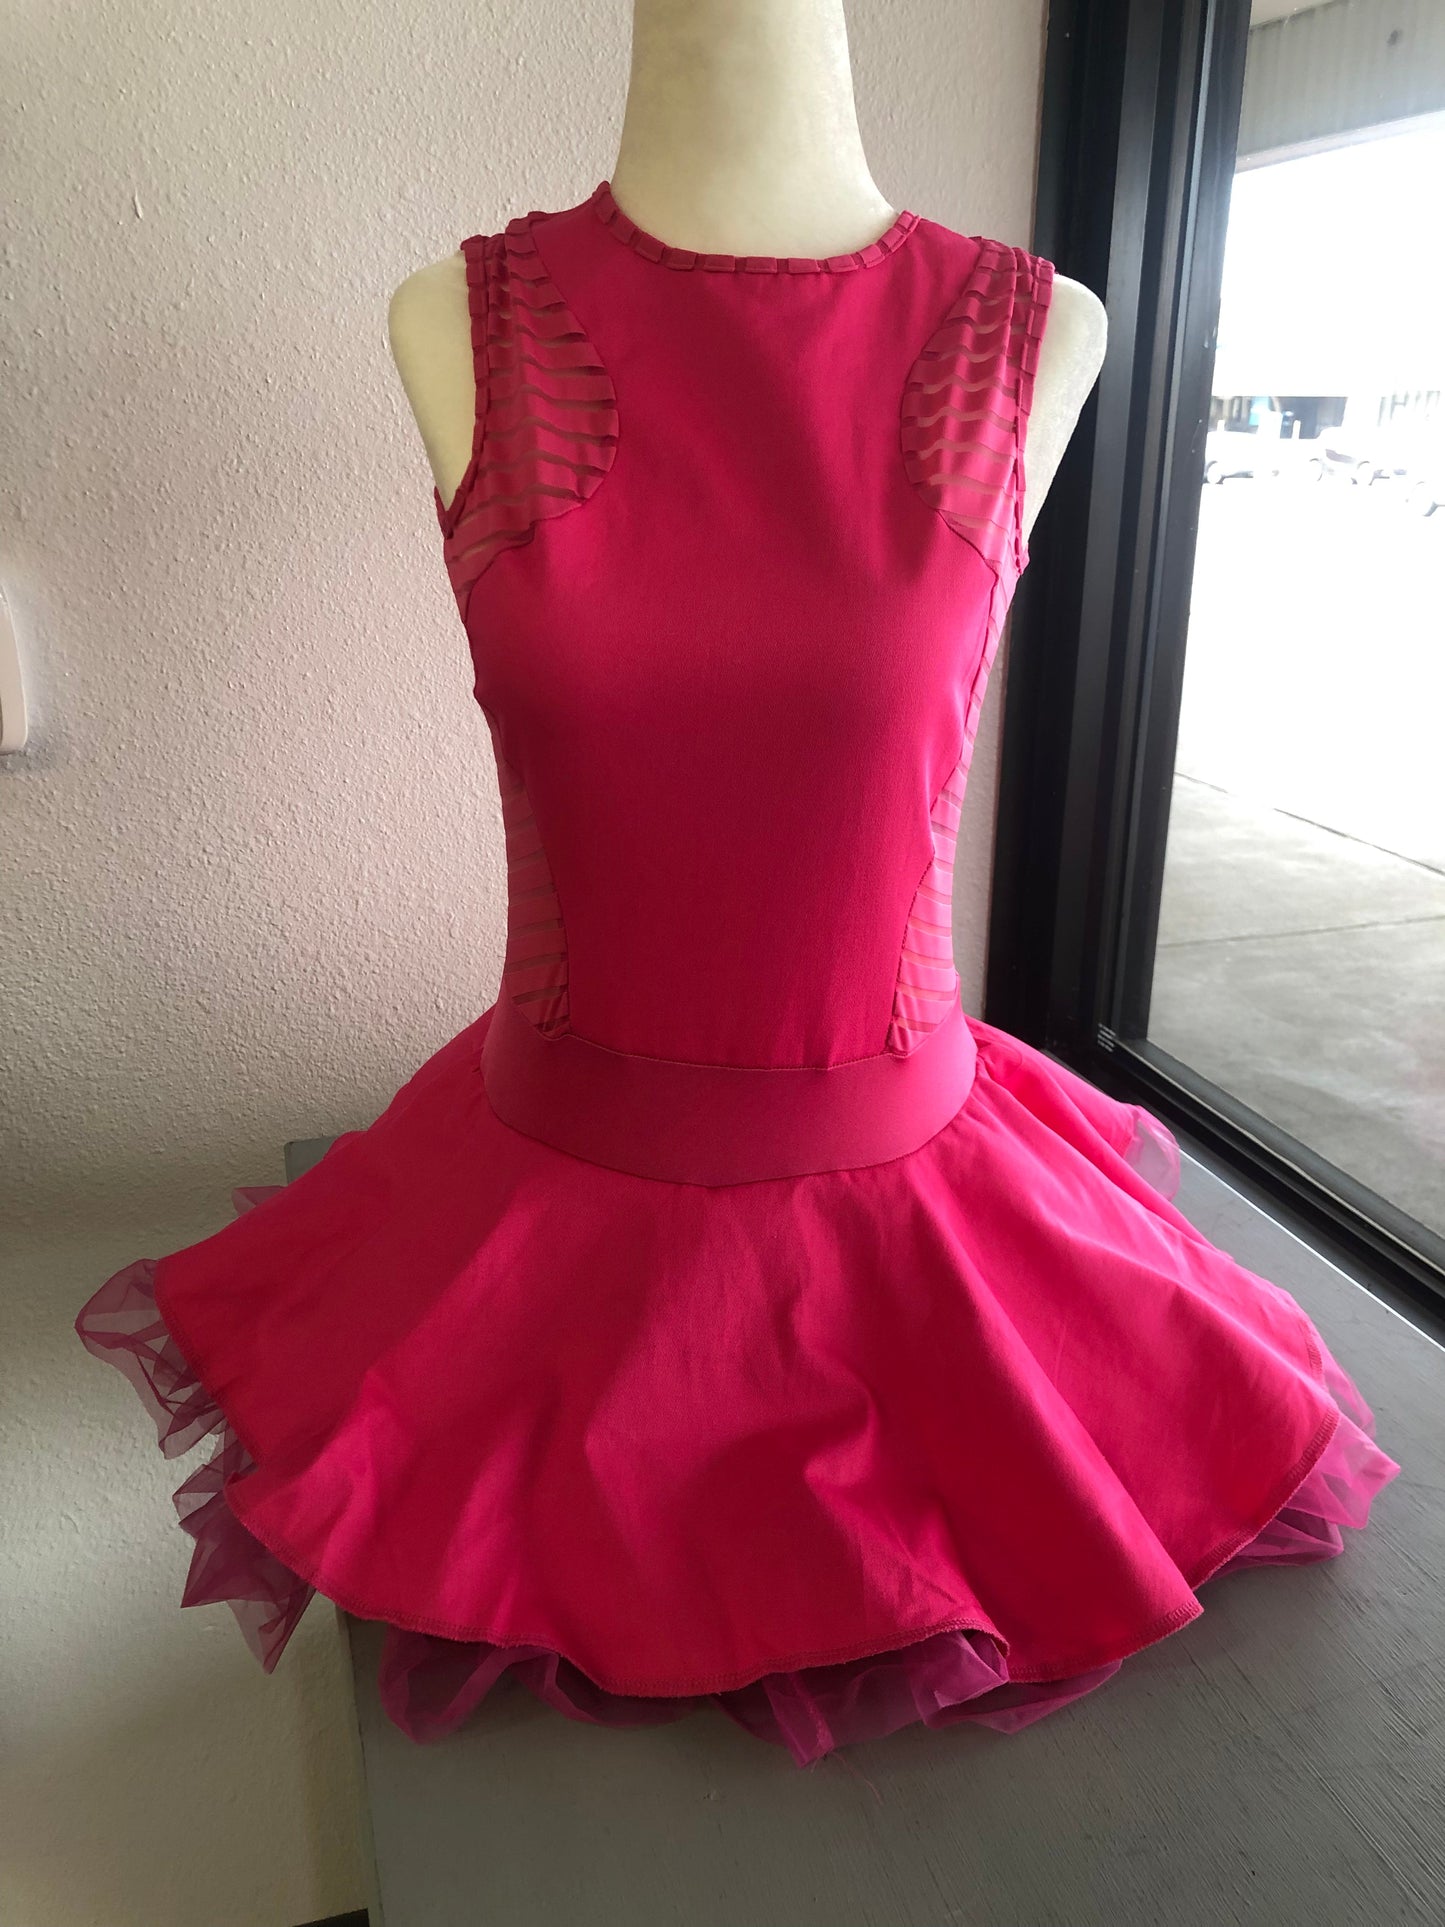 Adult Medium Pink Dress